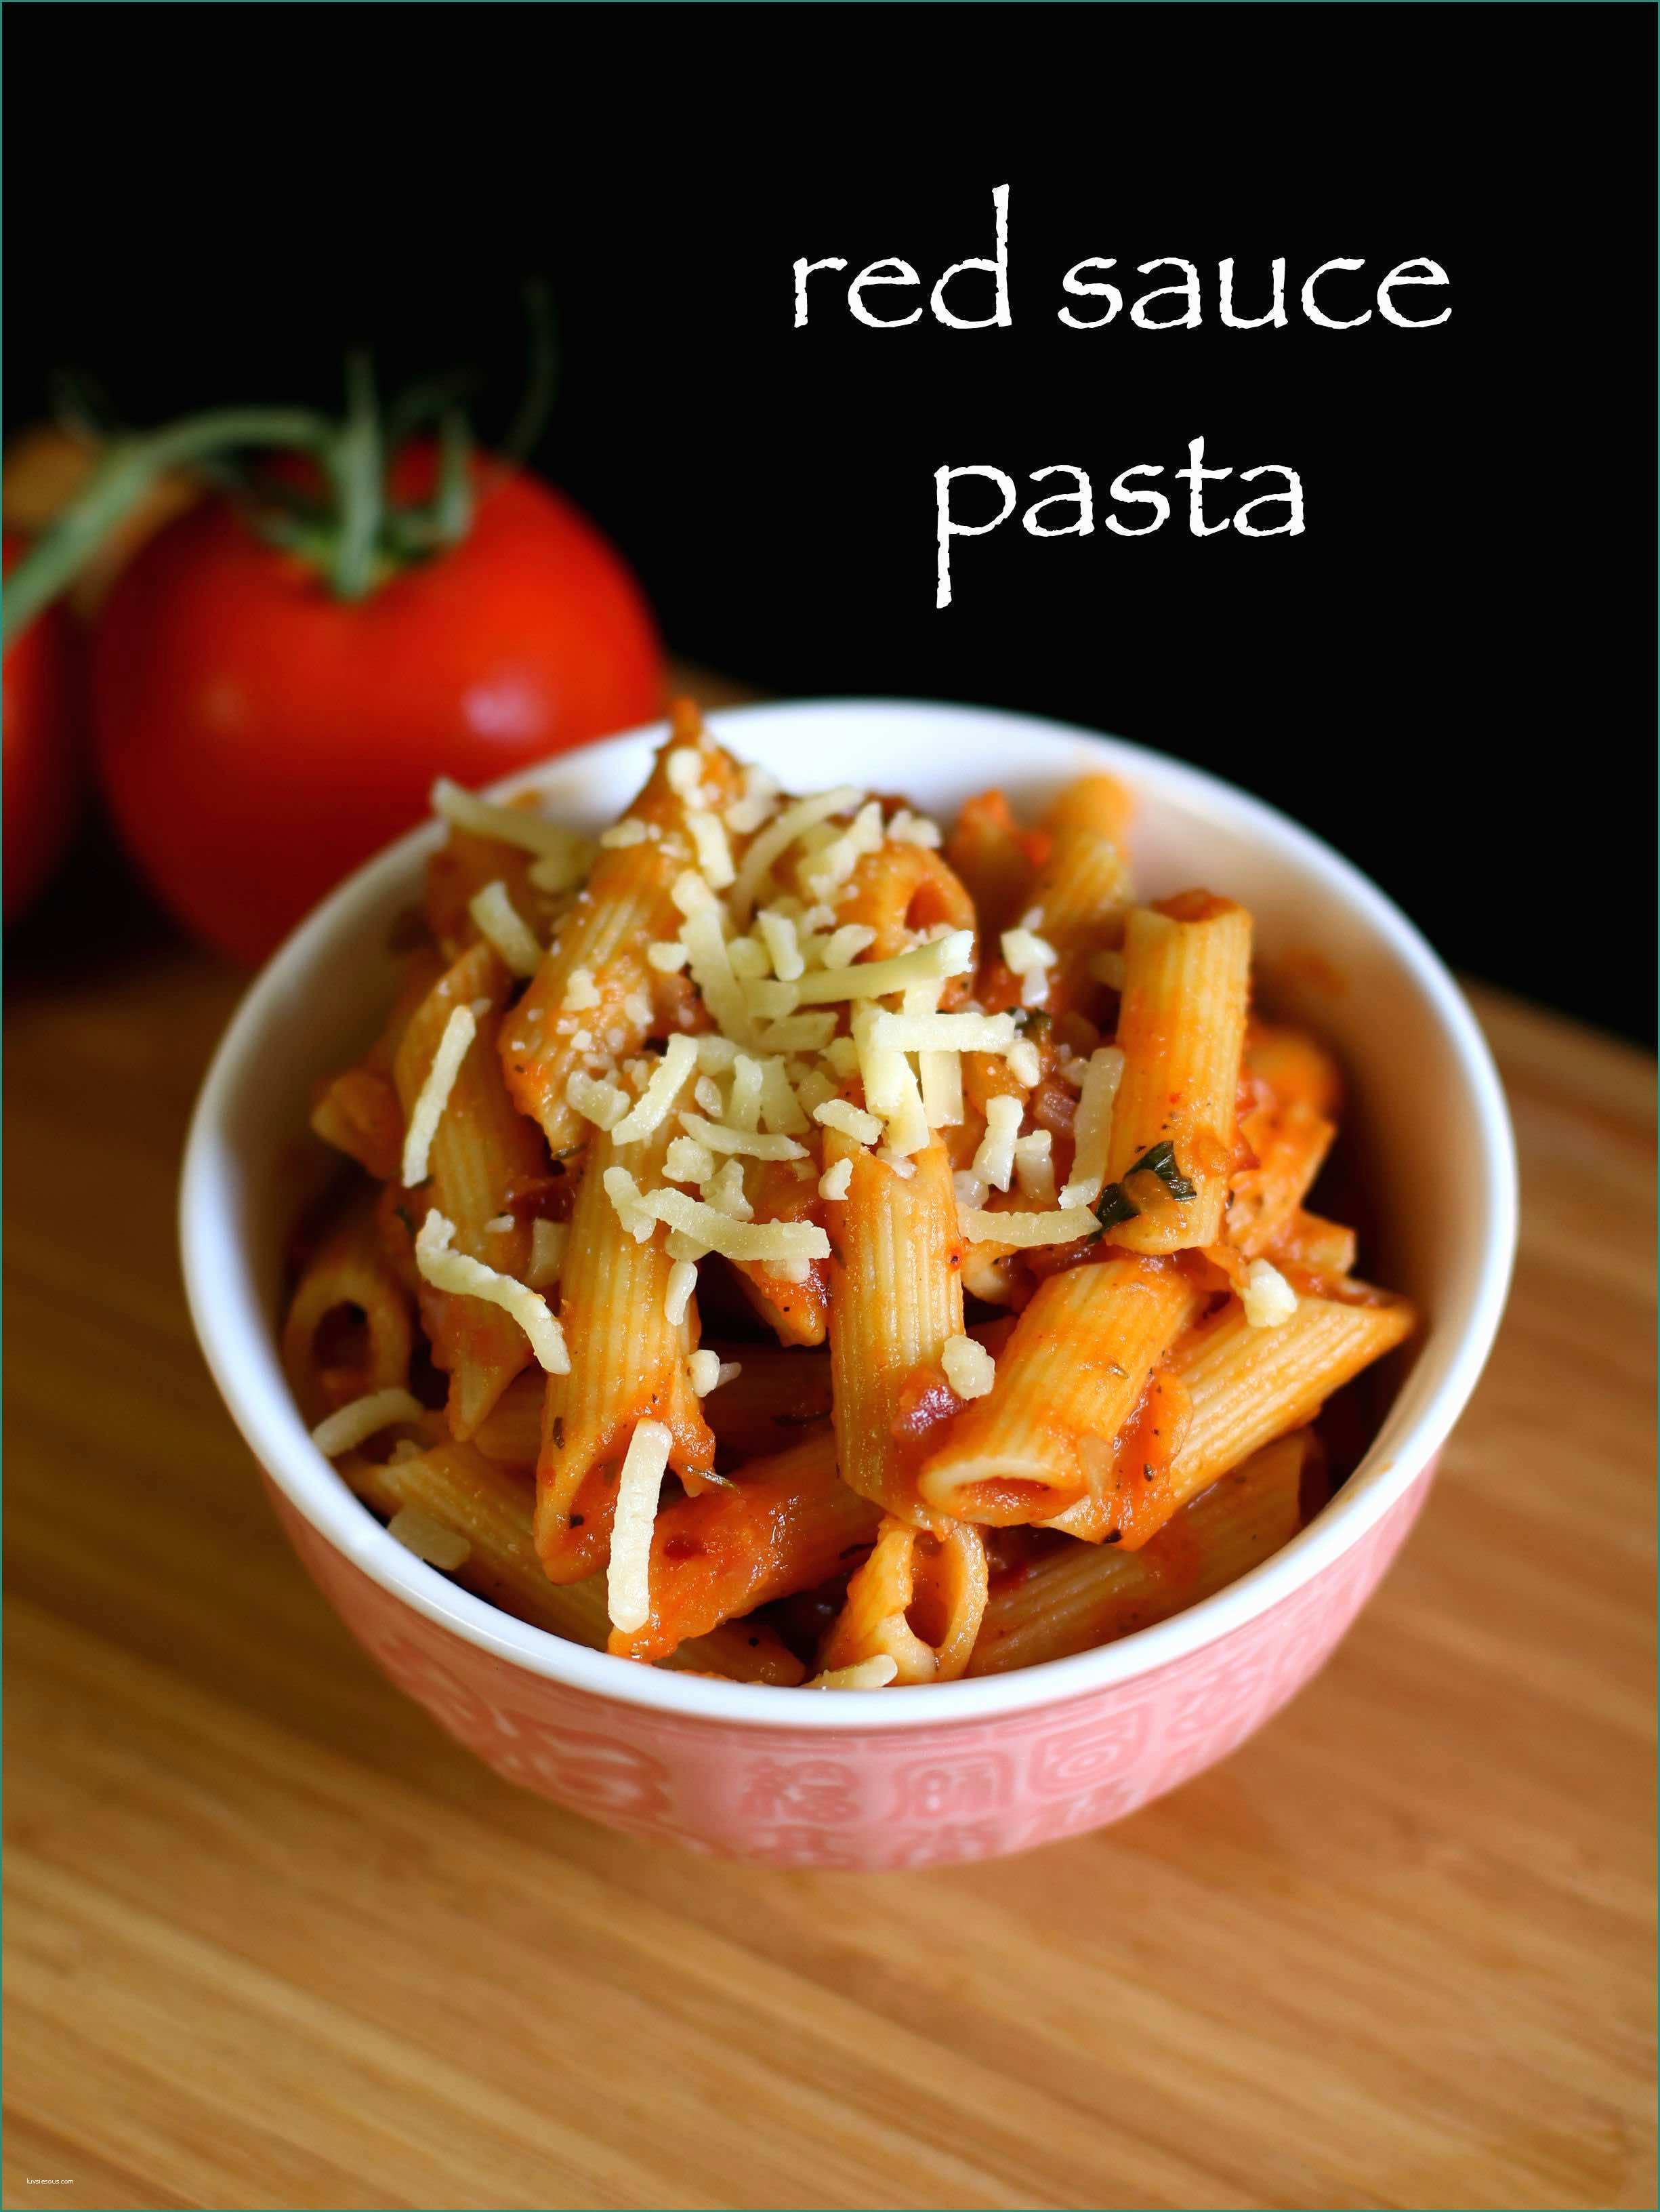 Trofie Al Pesto Genovese E Red Sauce Pasta Recipe Pasta In Red Sauce Recipe